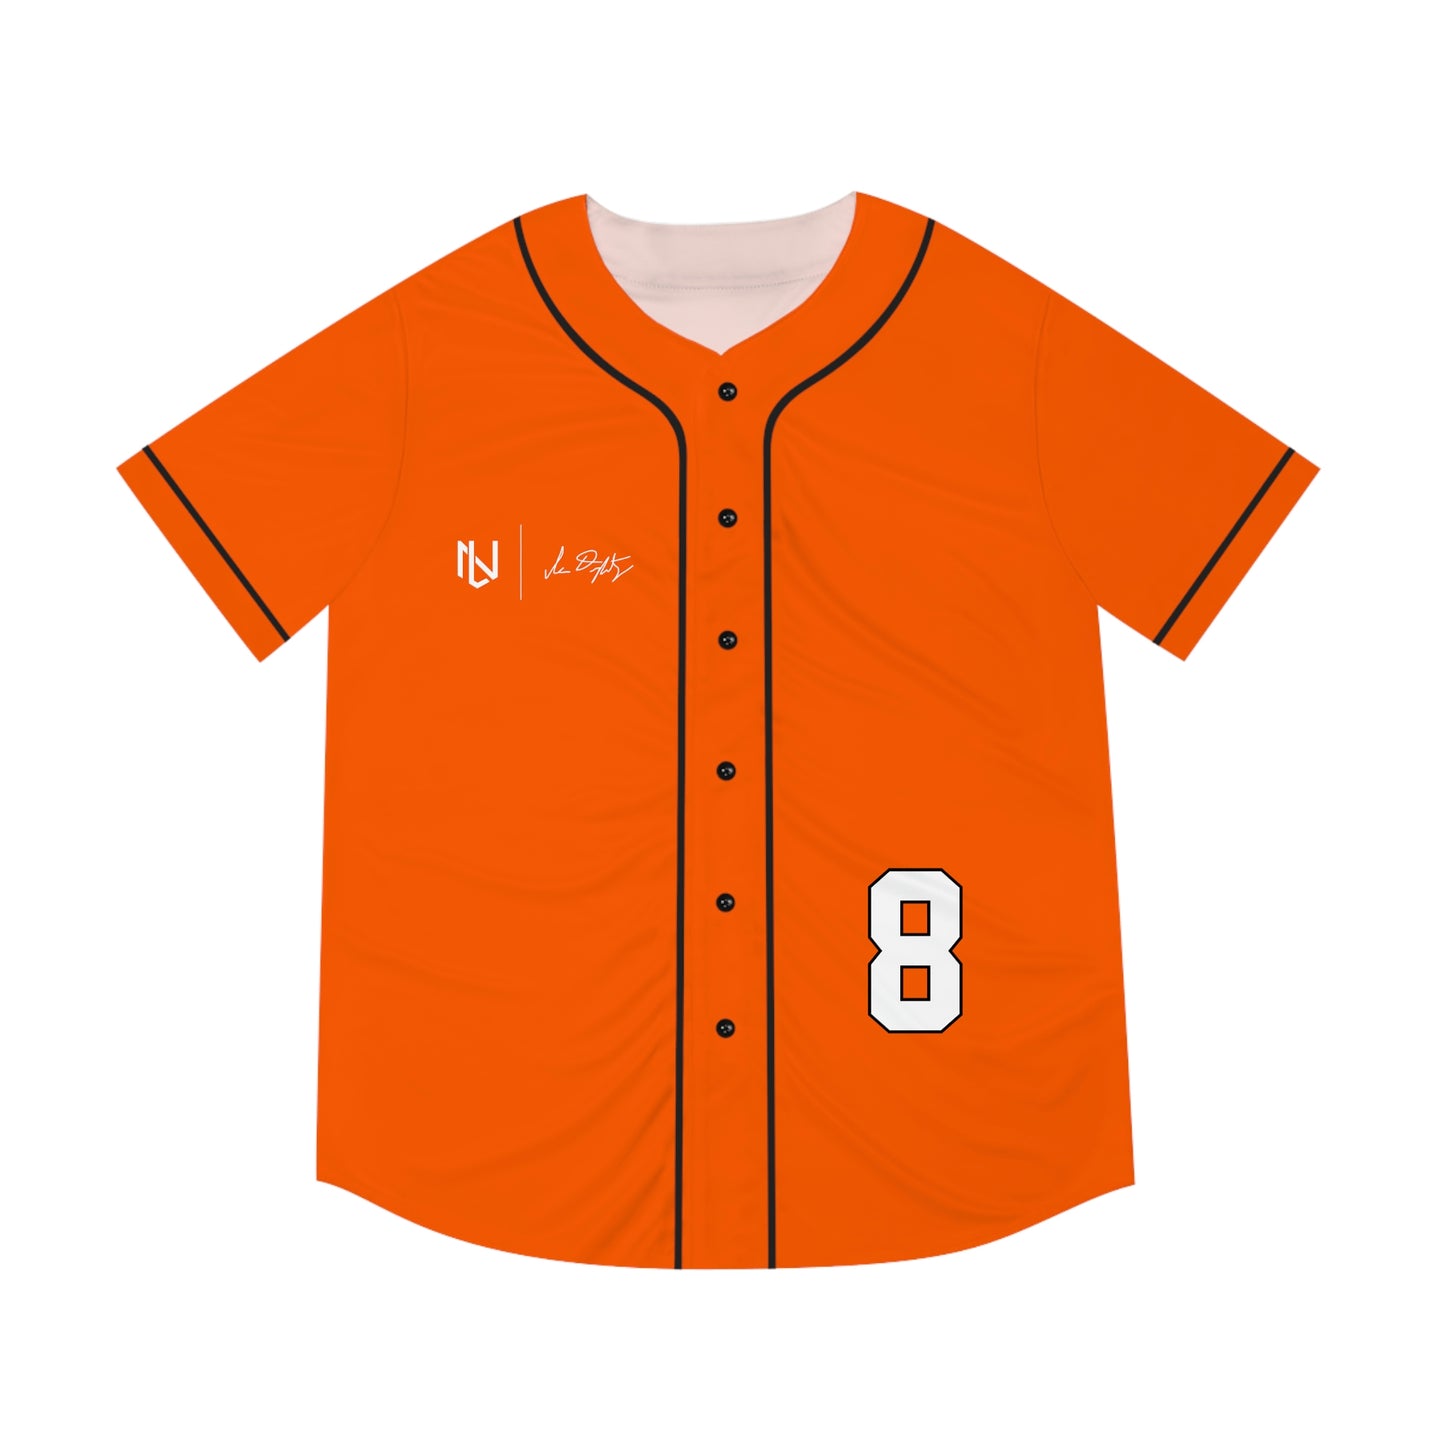 Ian Daugherty Baseball Jersey (Orange)